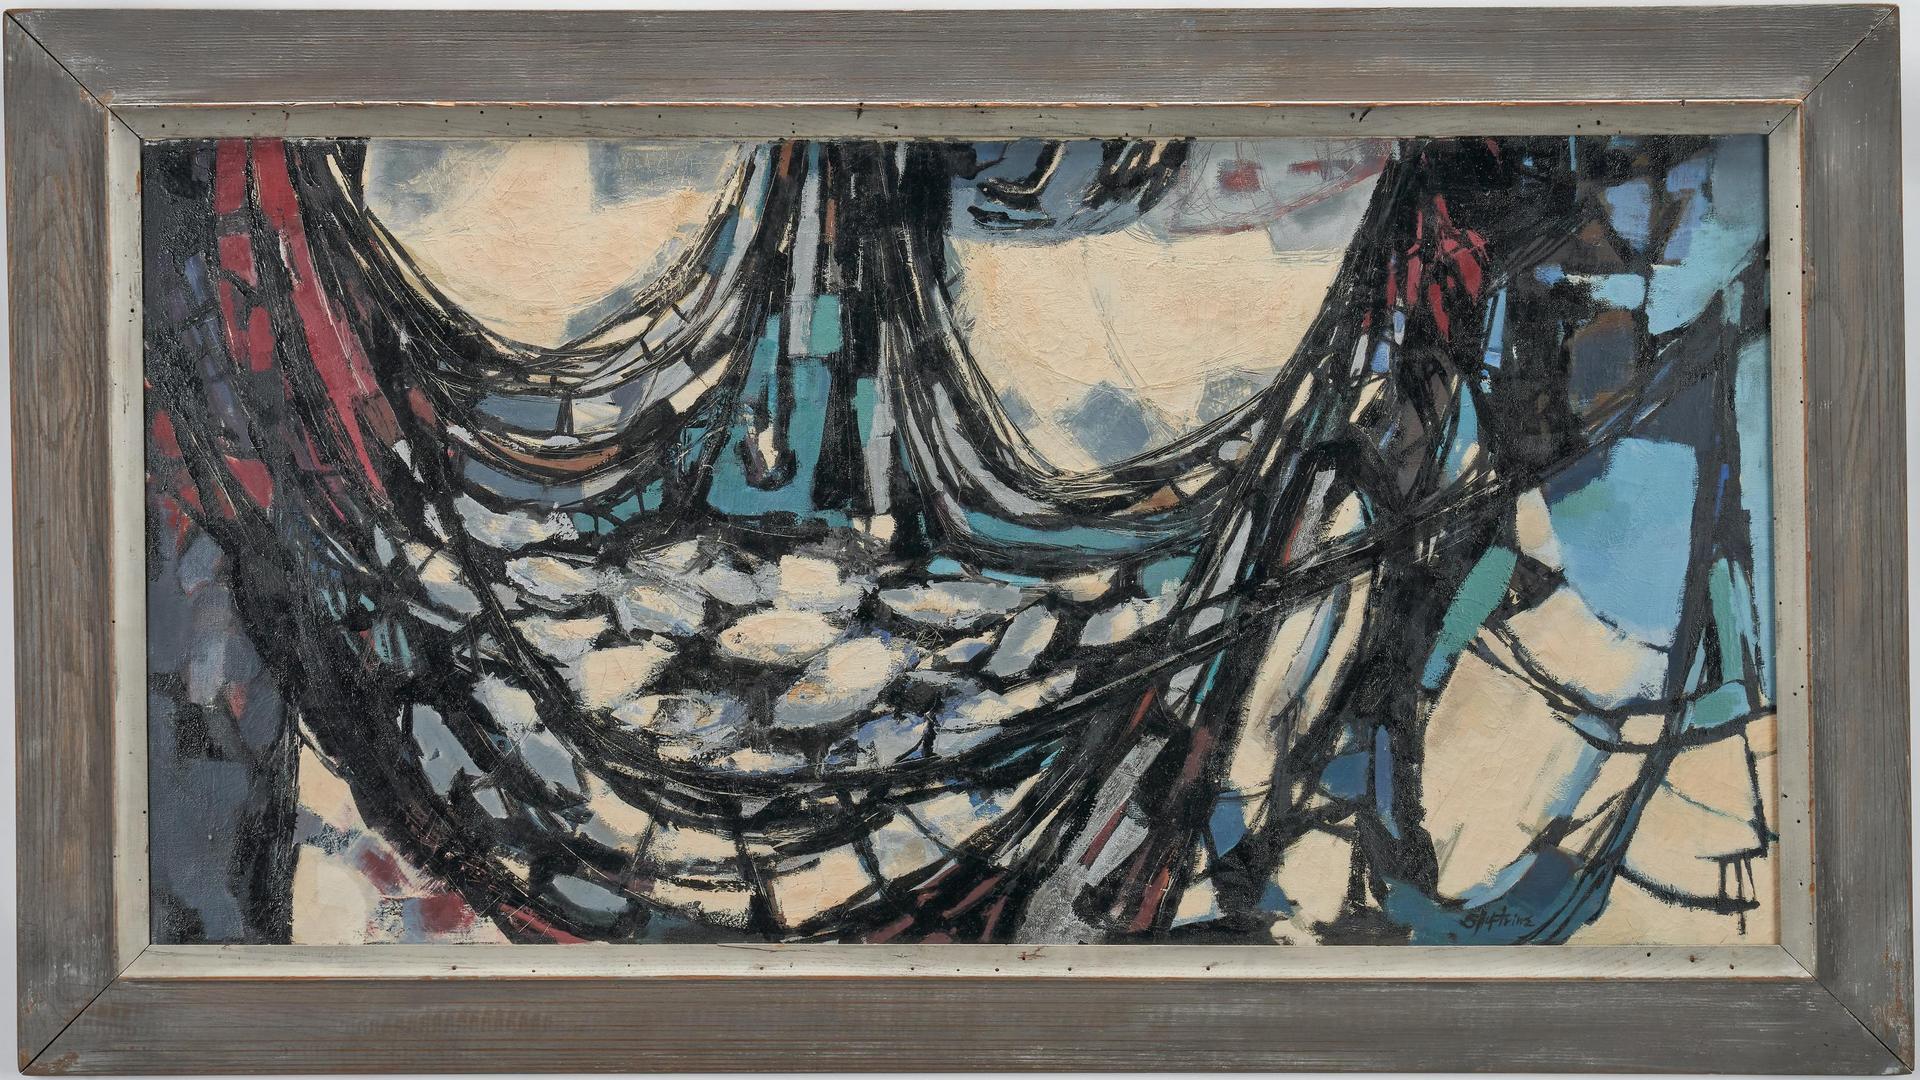 Lot 135: H. O. Shuptrine, Jr. O/C Abstract Painting, Fish Nets